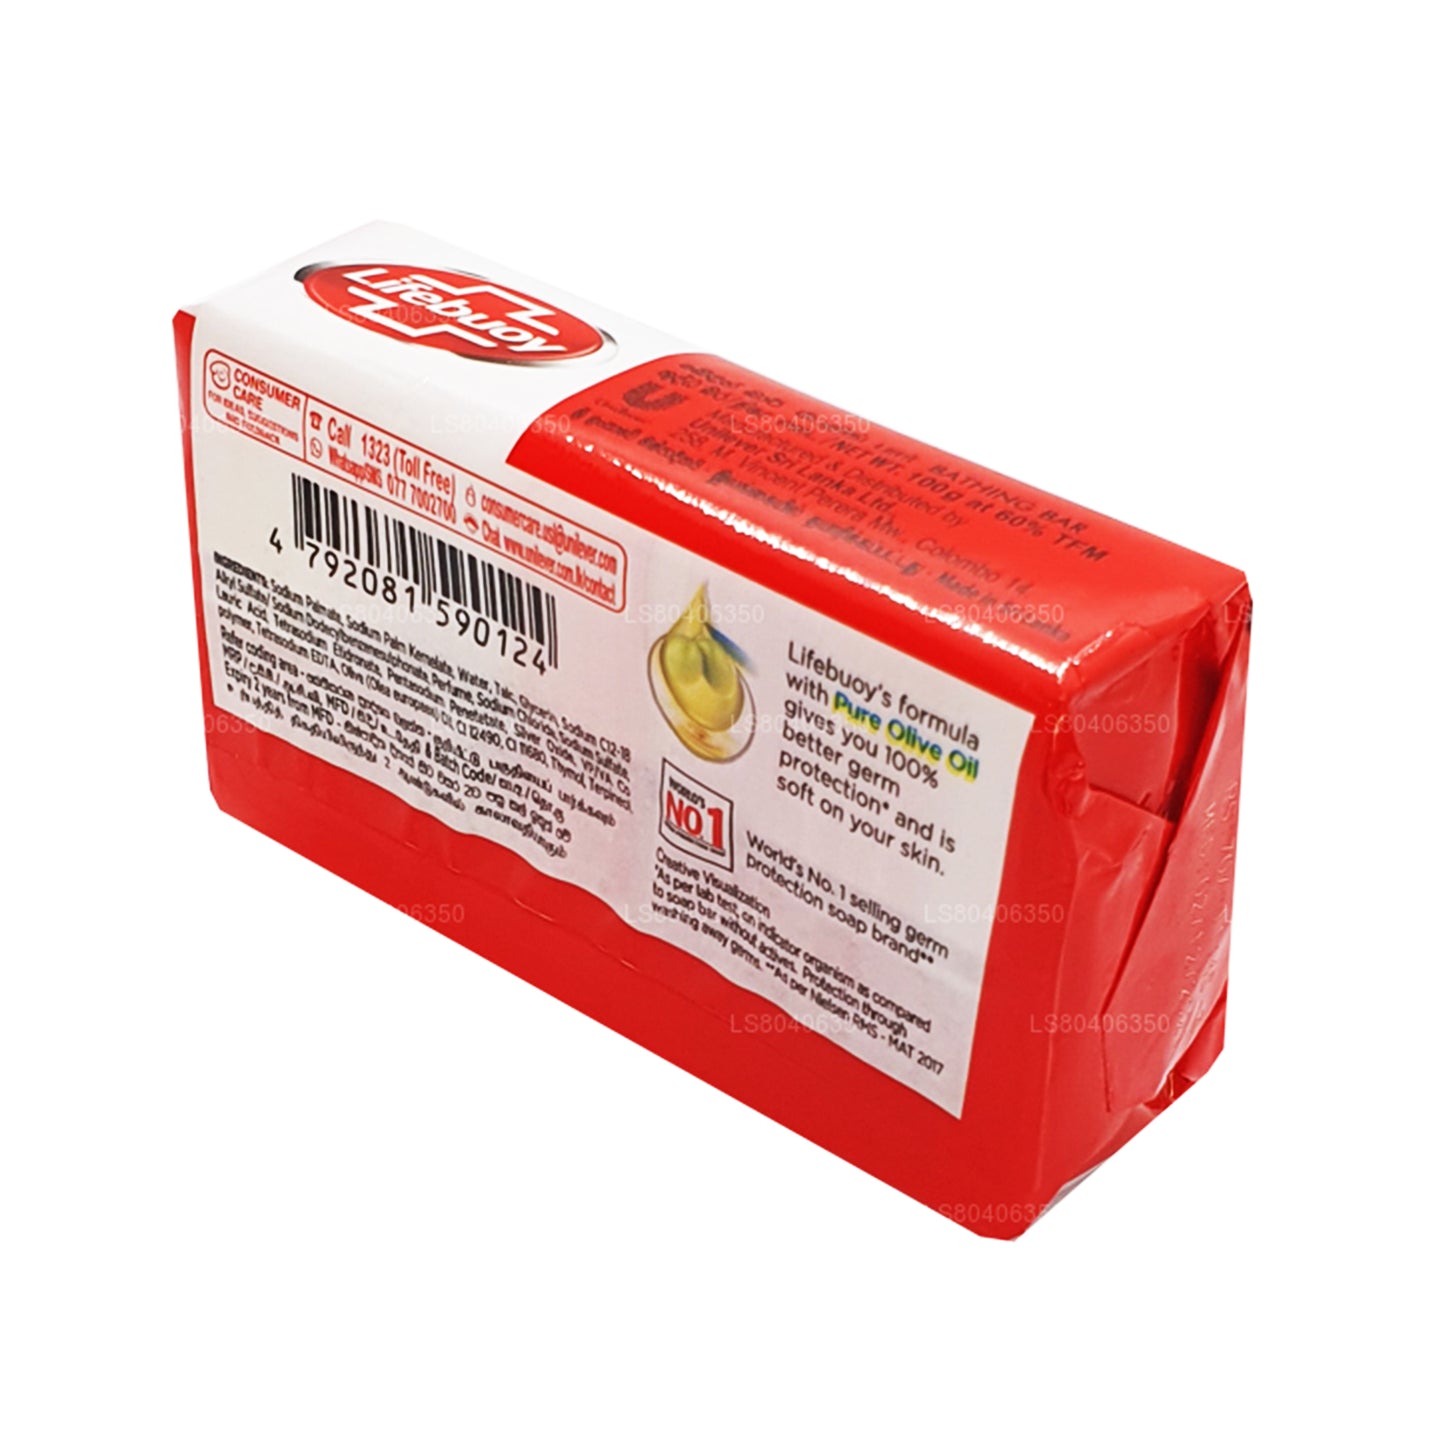 Lifebuoy Total 10 含纯橄榄油沐浴露 (100 g)